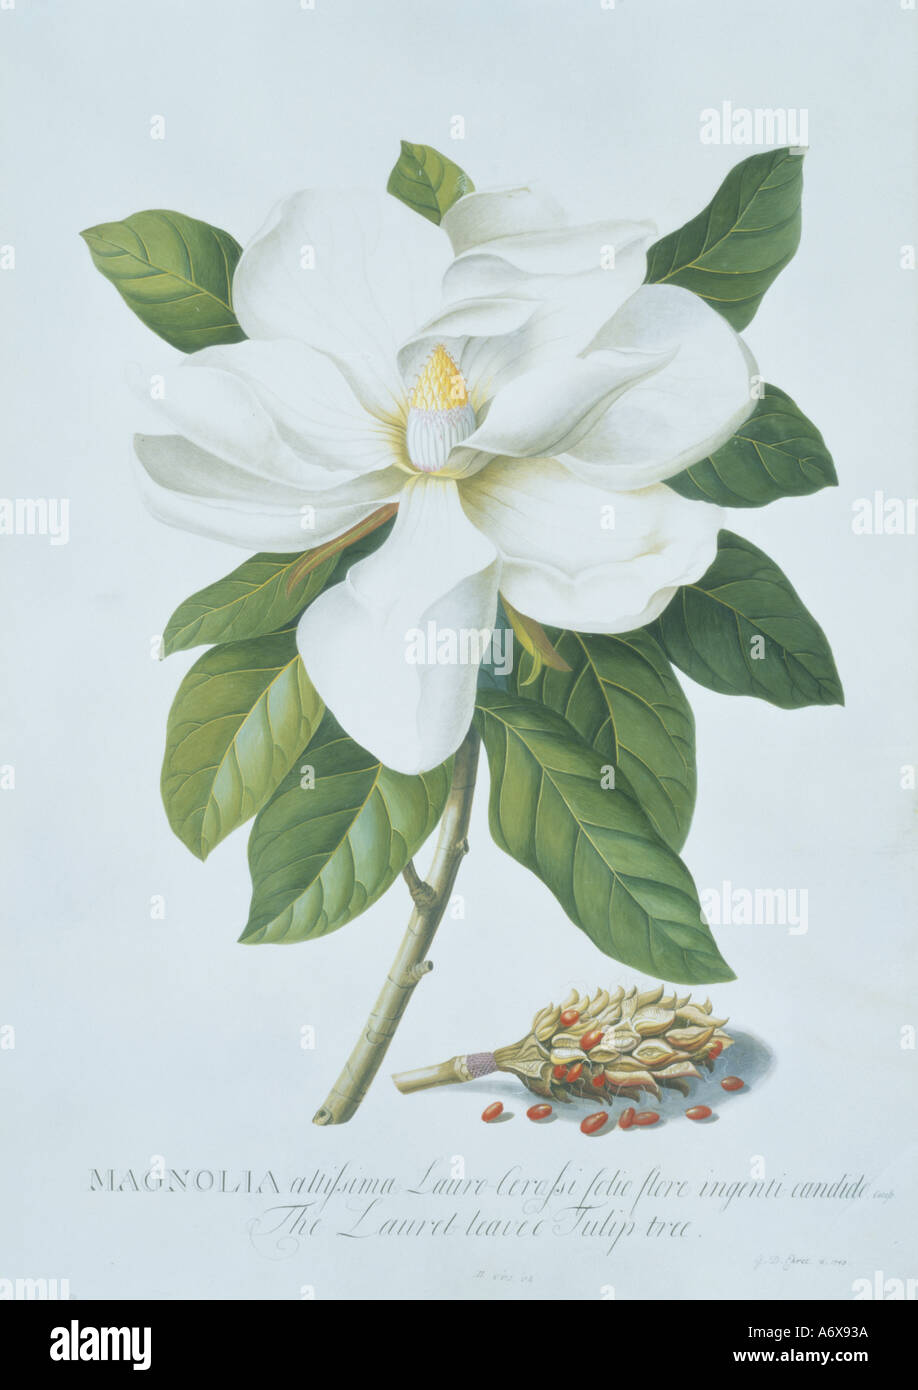 Magnolia by George Dionysus Ehret. England, 1743. Stock Photo